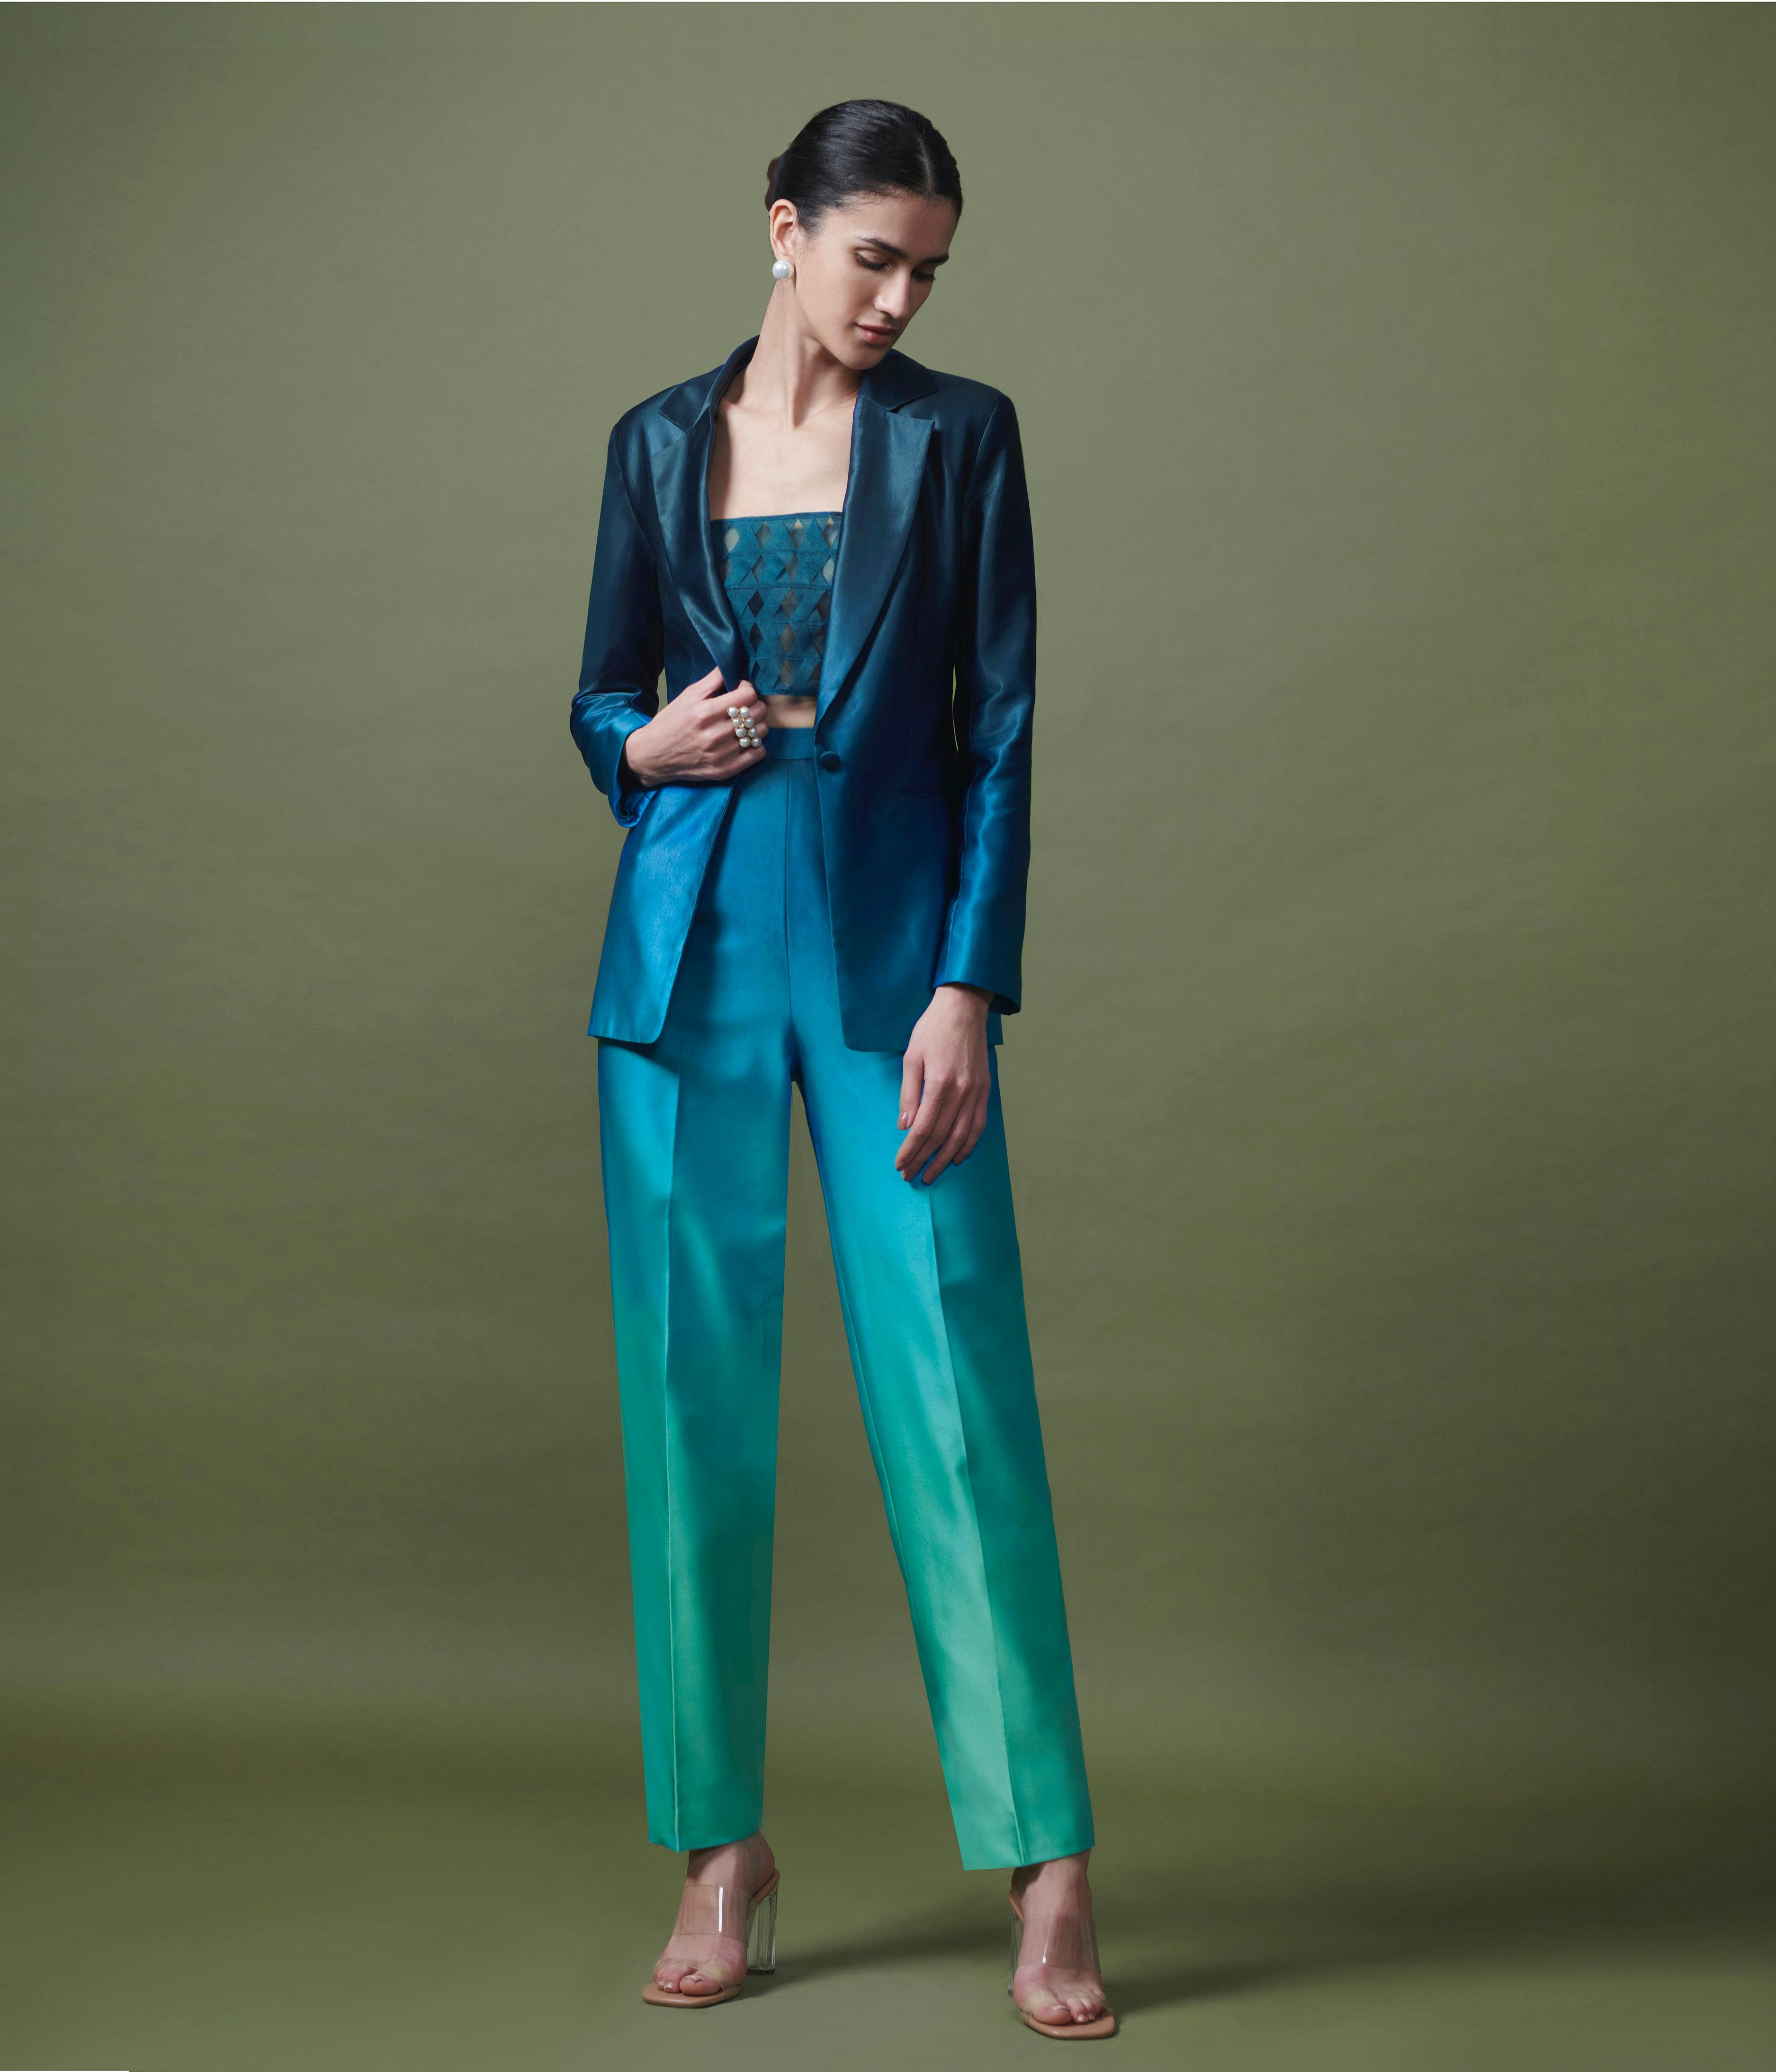 Gradient trouser, a product by Shriya Khanna